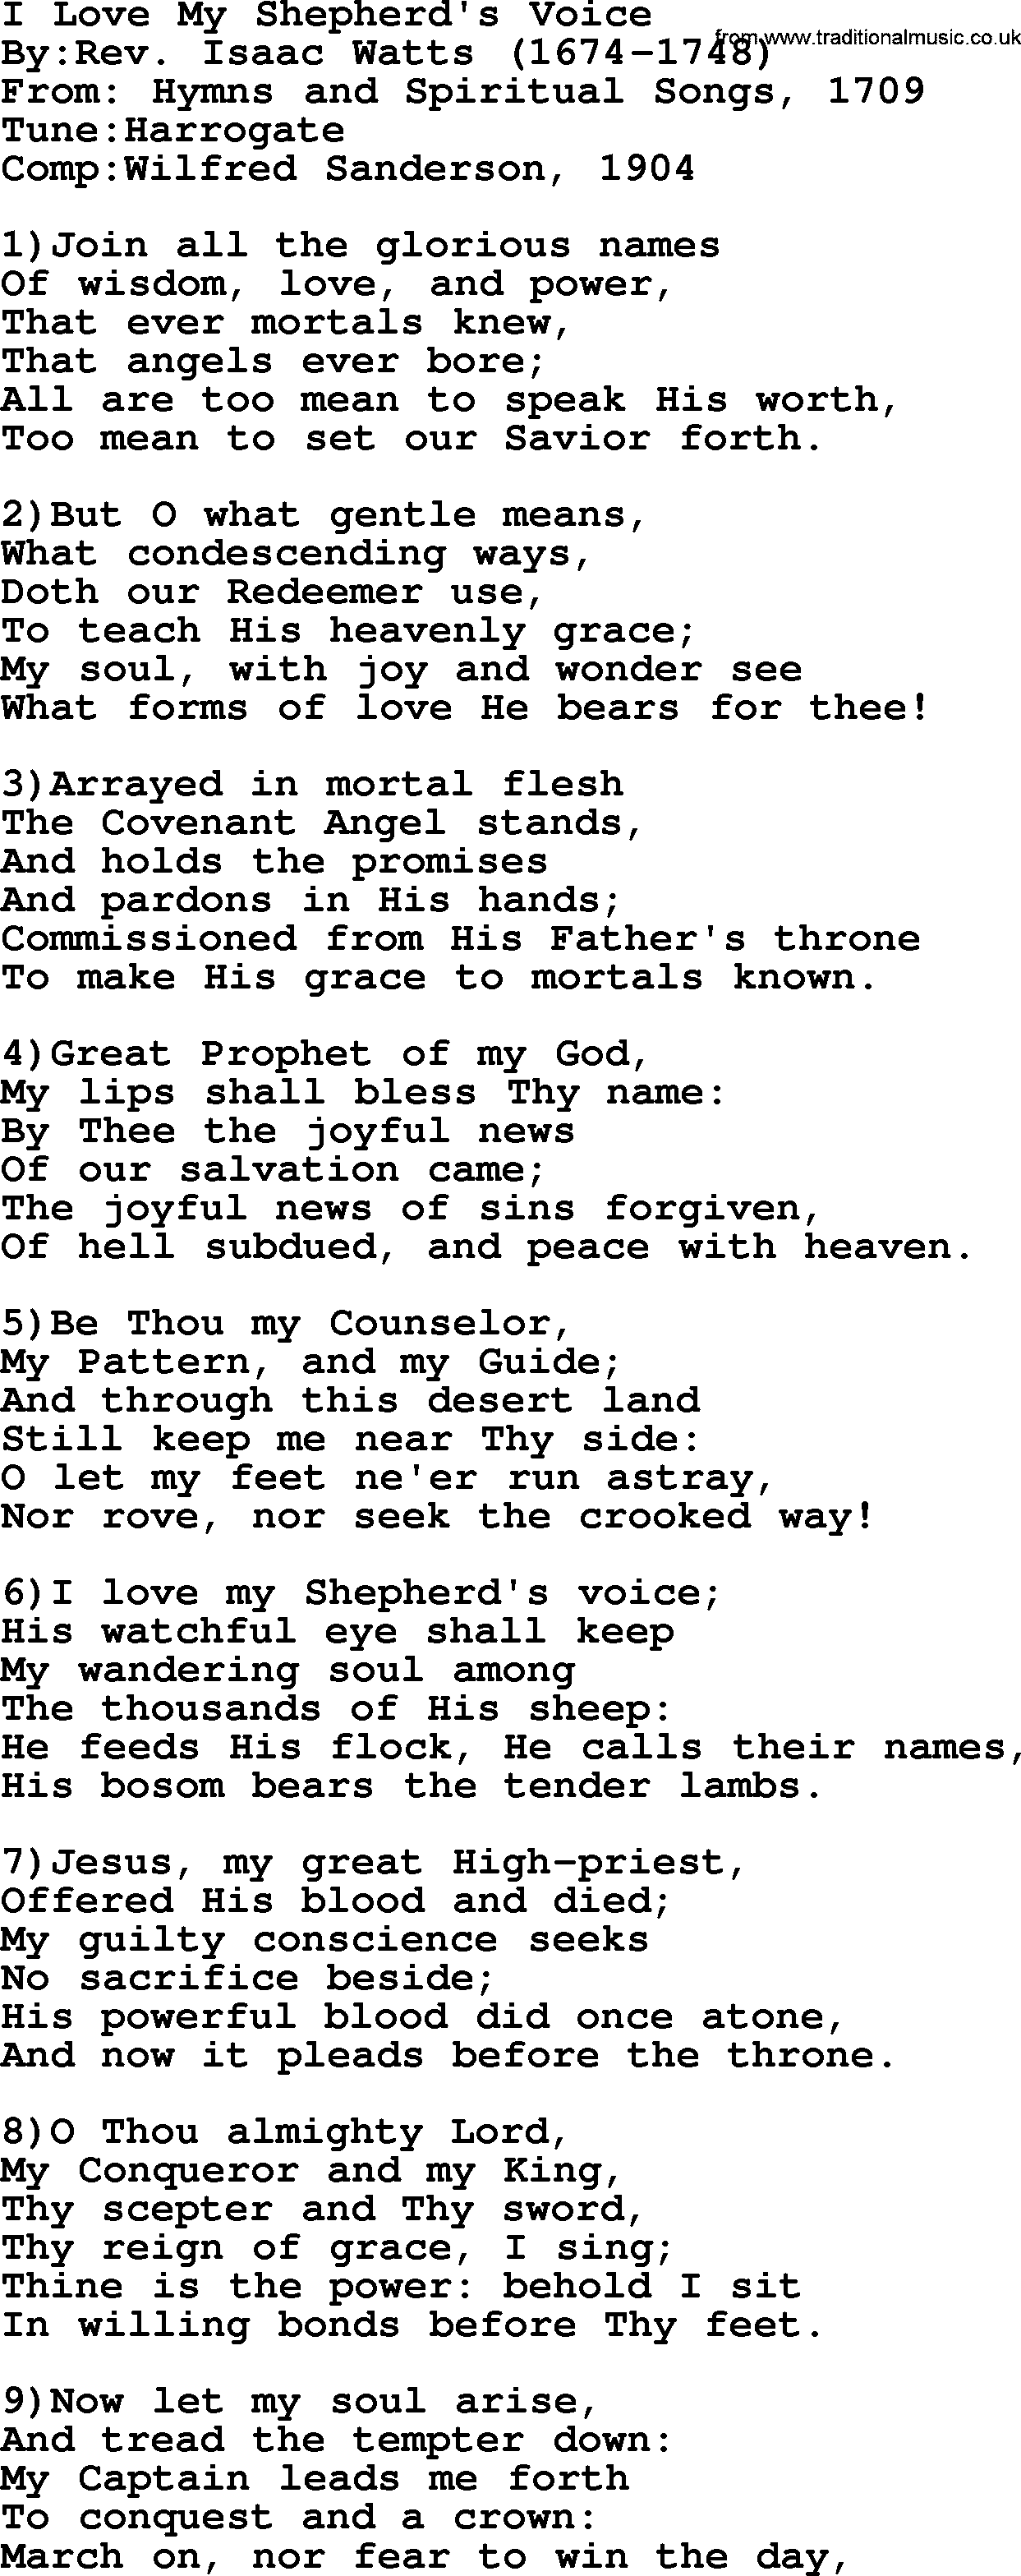 Methodist Hymn: I Love My Shepherd's Voice, lyrics